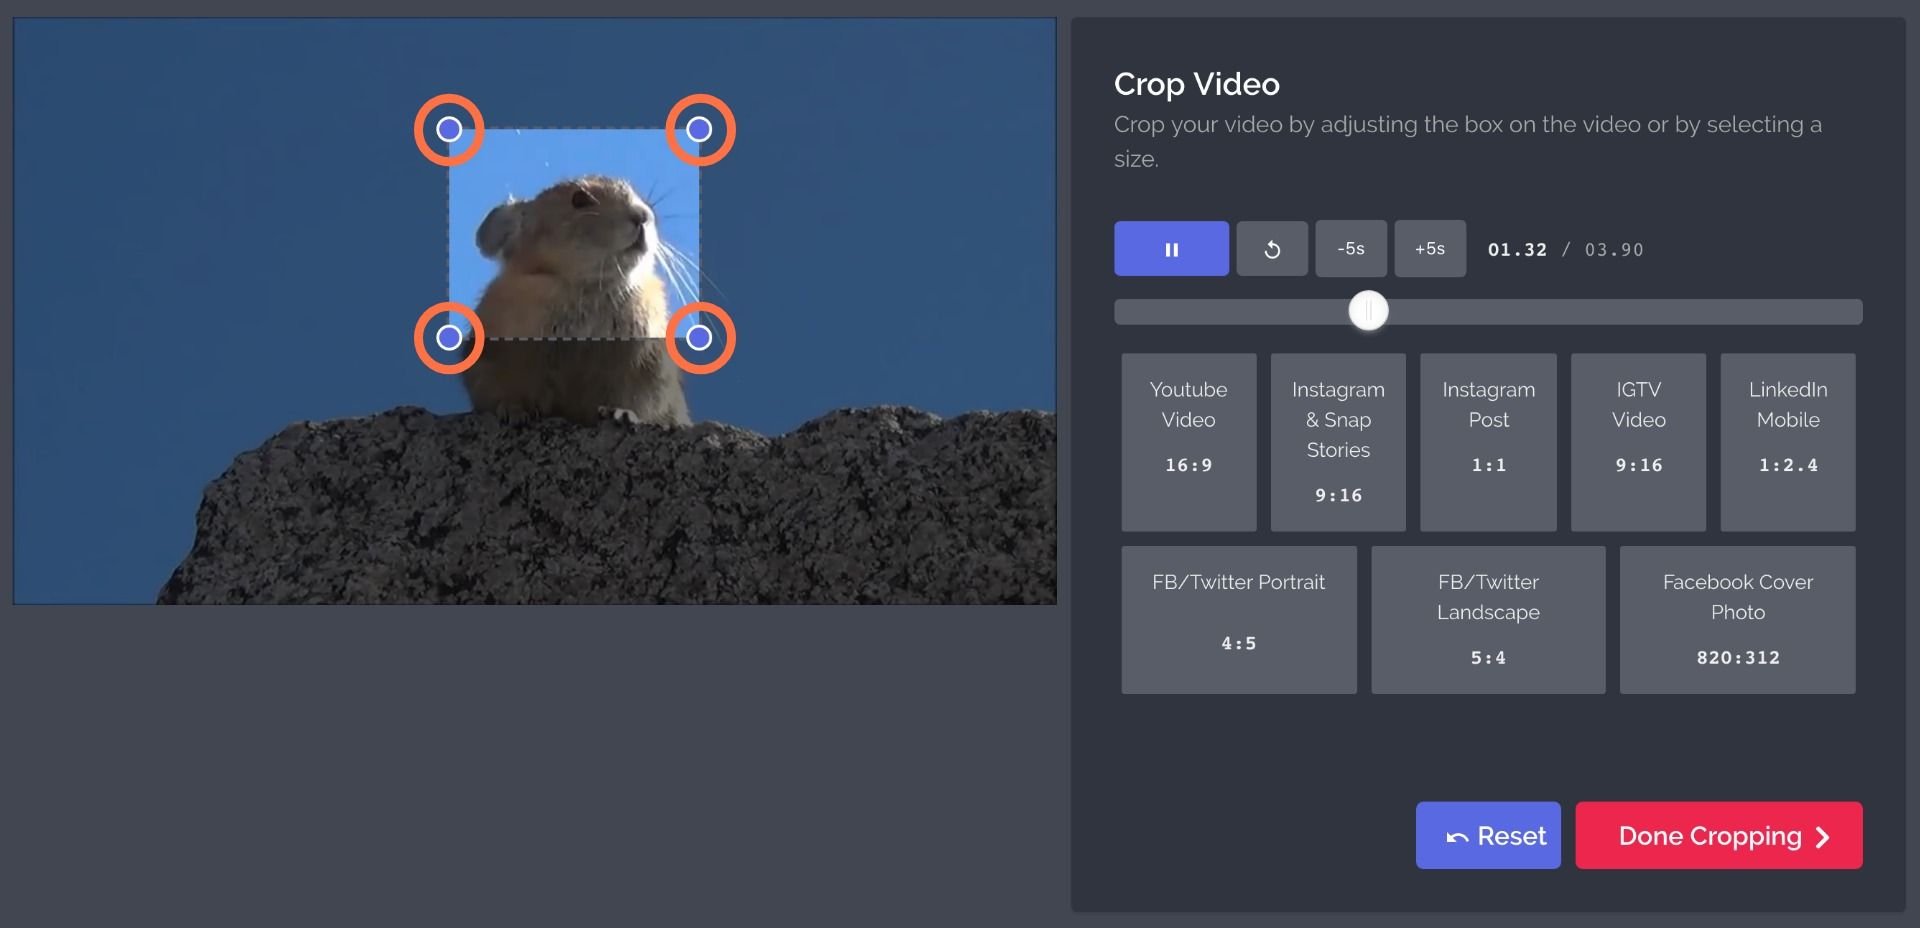 Crop video interface